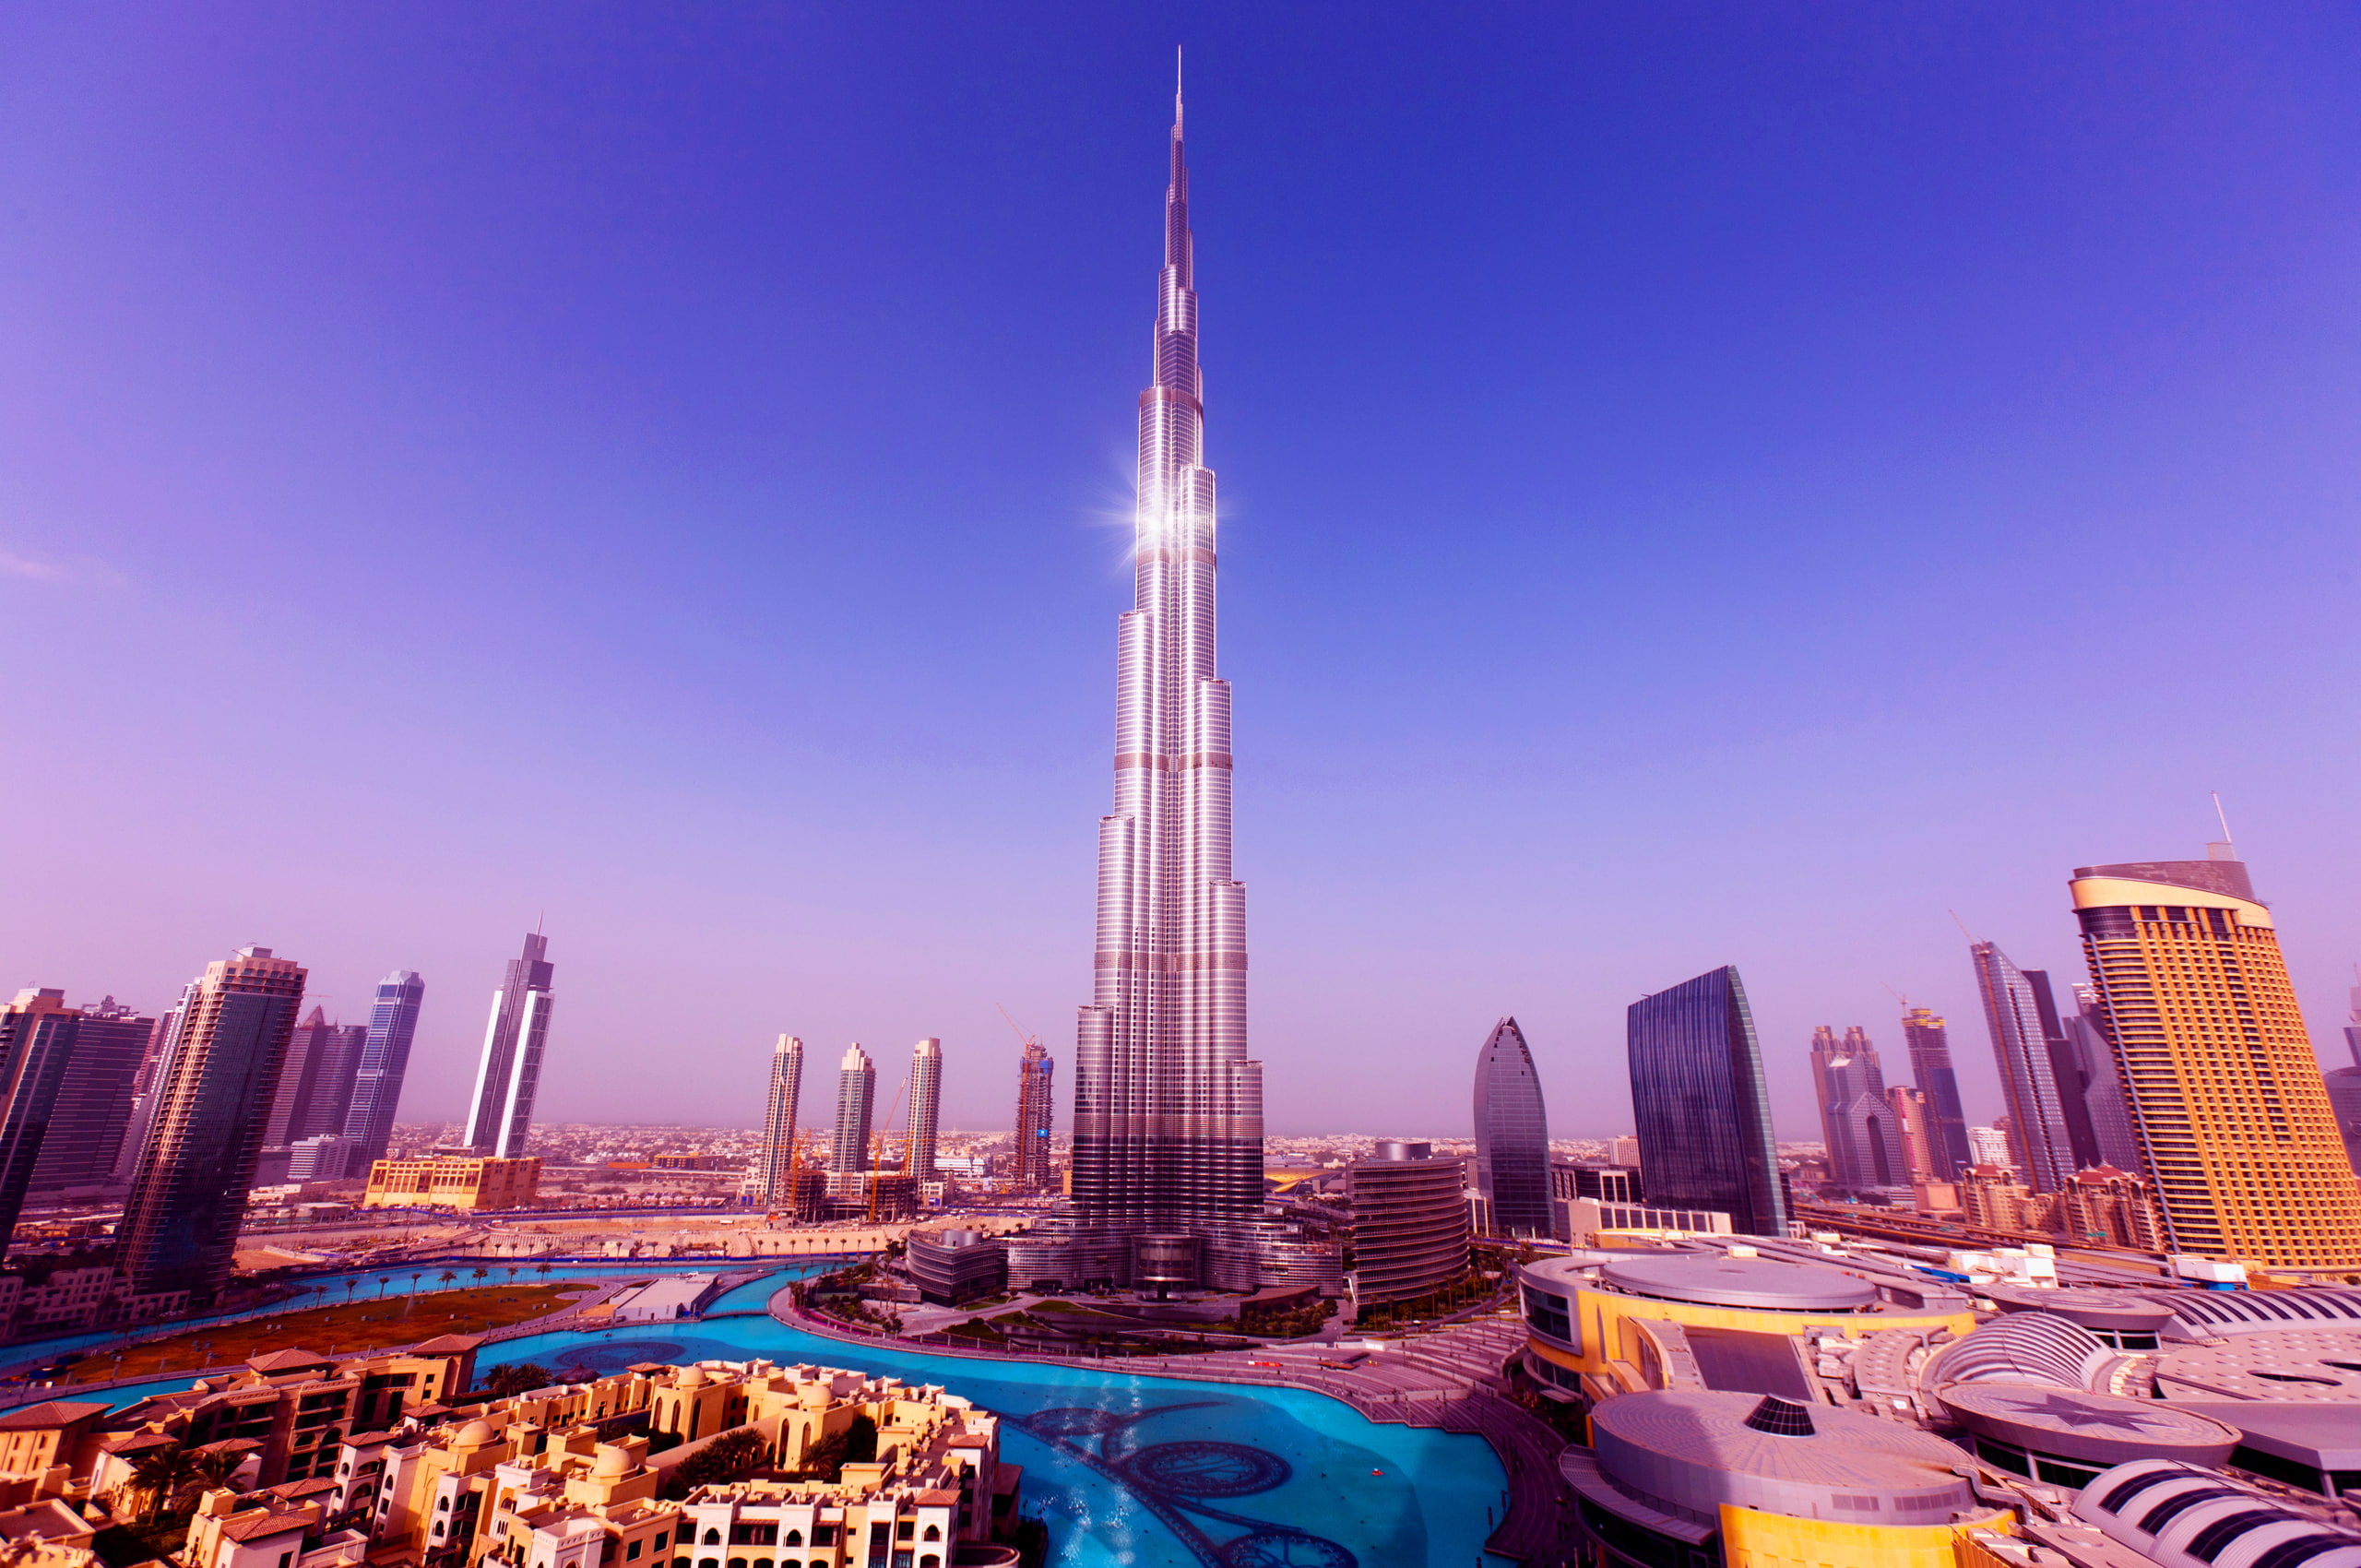 the city, tower, Dubai, 163 floors, Burj Khalifa, 828 meters